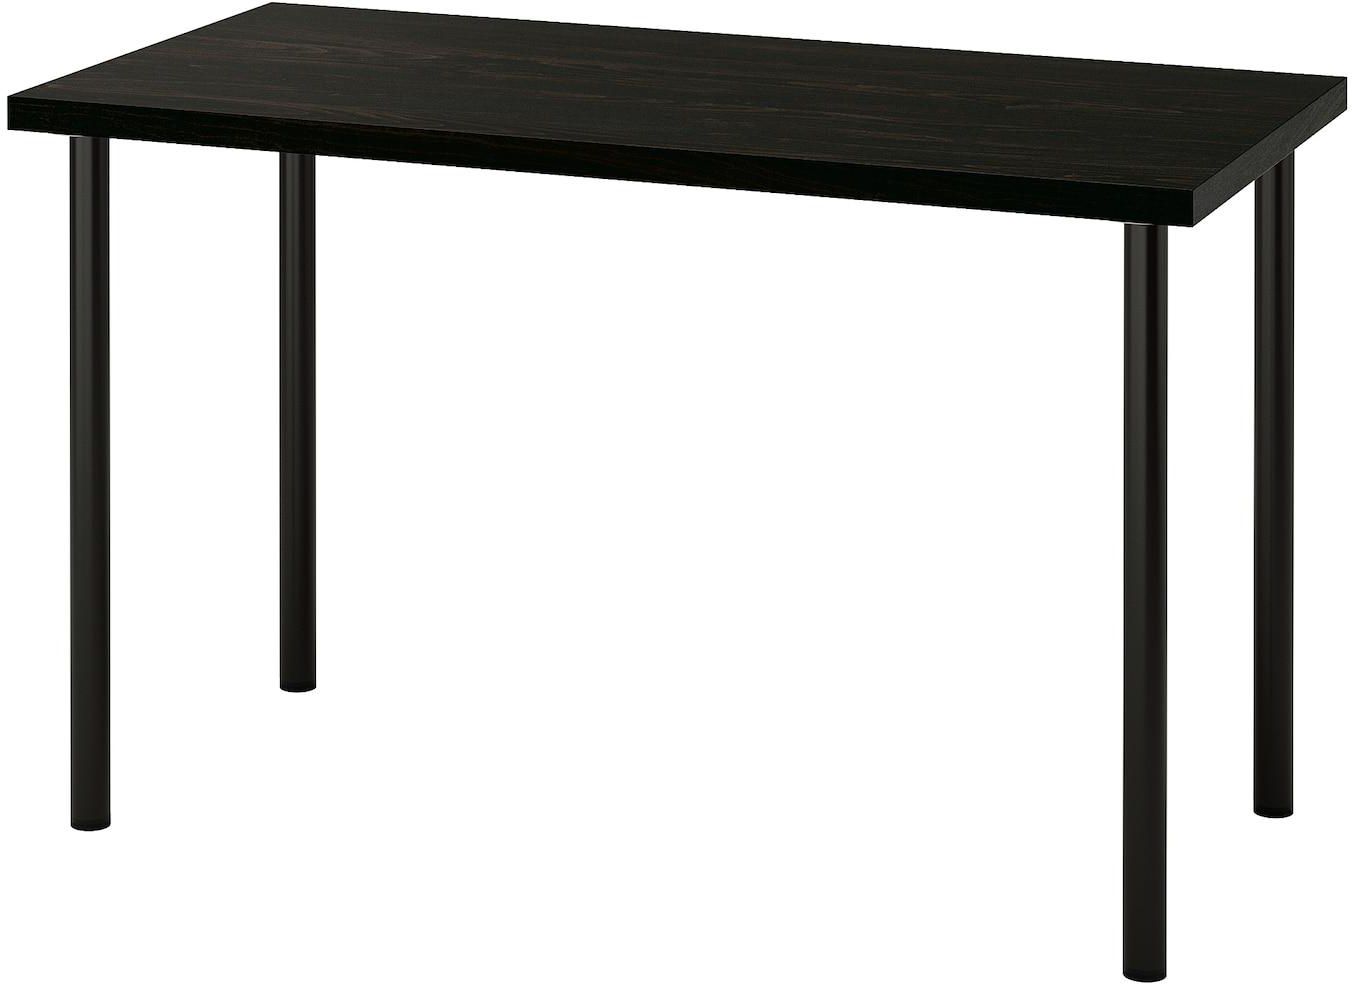 LAGKAPTEN / ADILS Desk - black-brown/black 120x60 cm